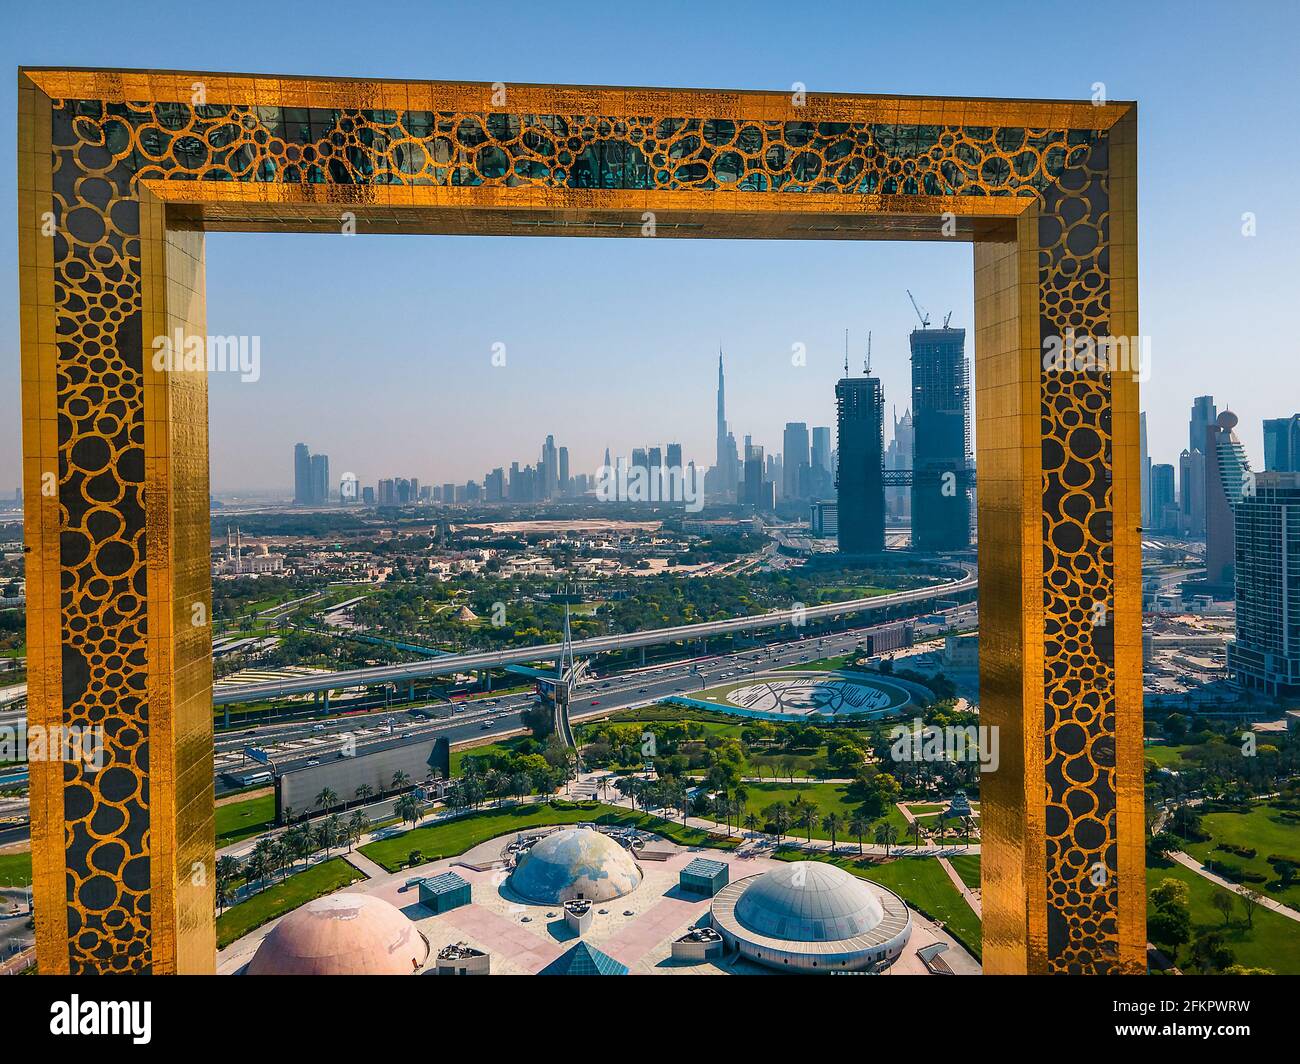 Dubai, United Arab Emirates, April 19, 2021: Dubai skyline seen through Dubai Frame building with Zabeel park and Dubai skyline aerial cityscape view Stock Photo